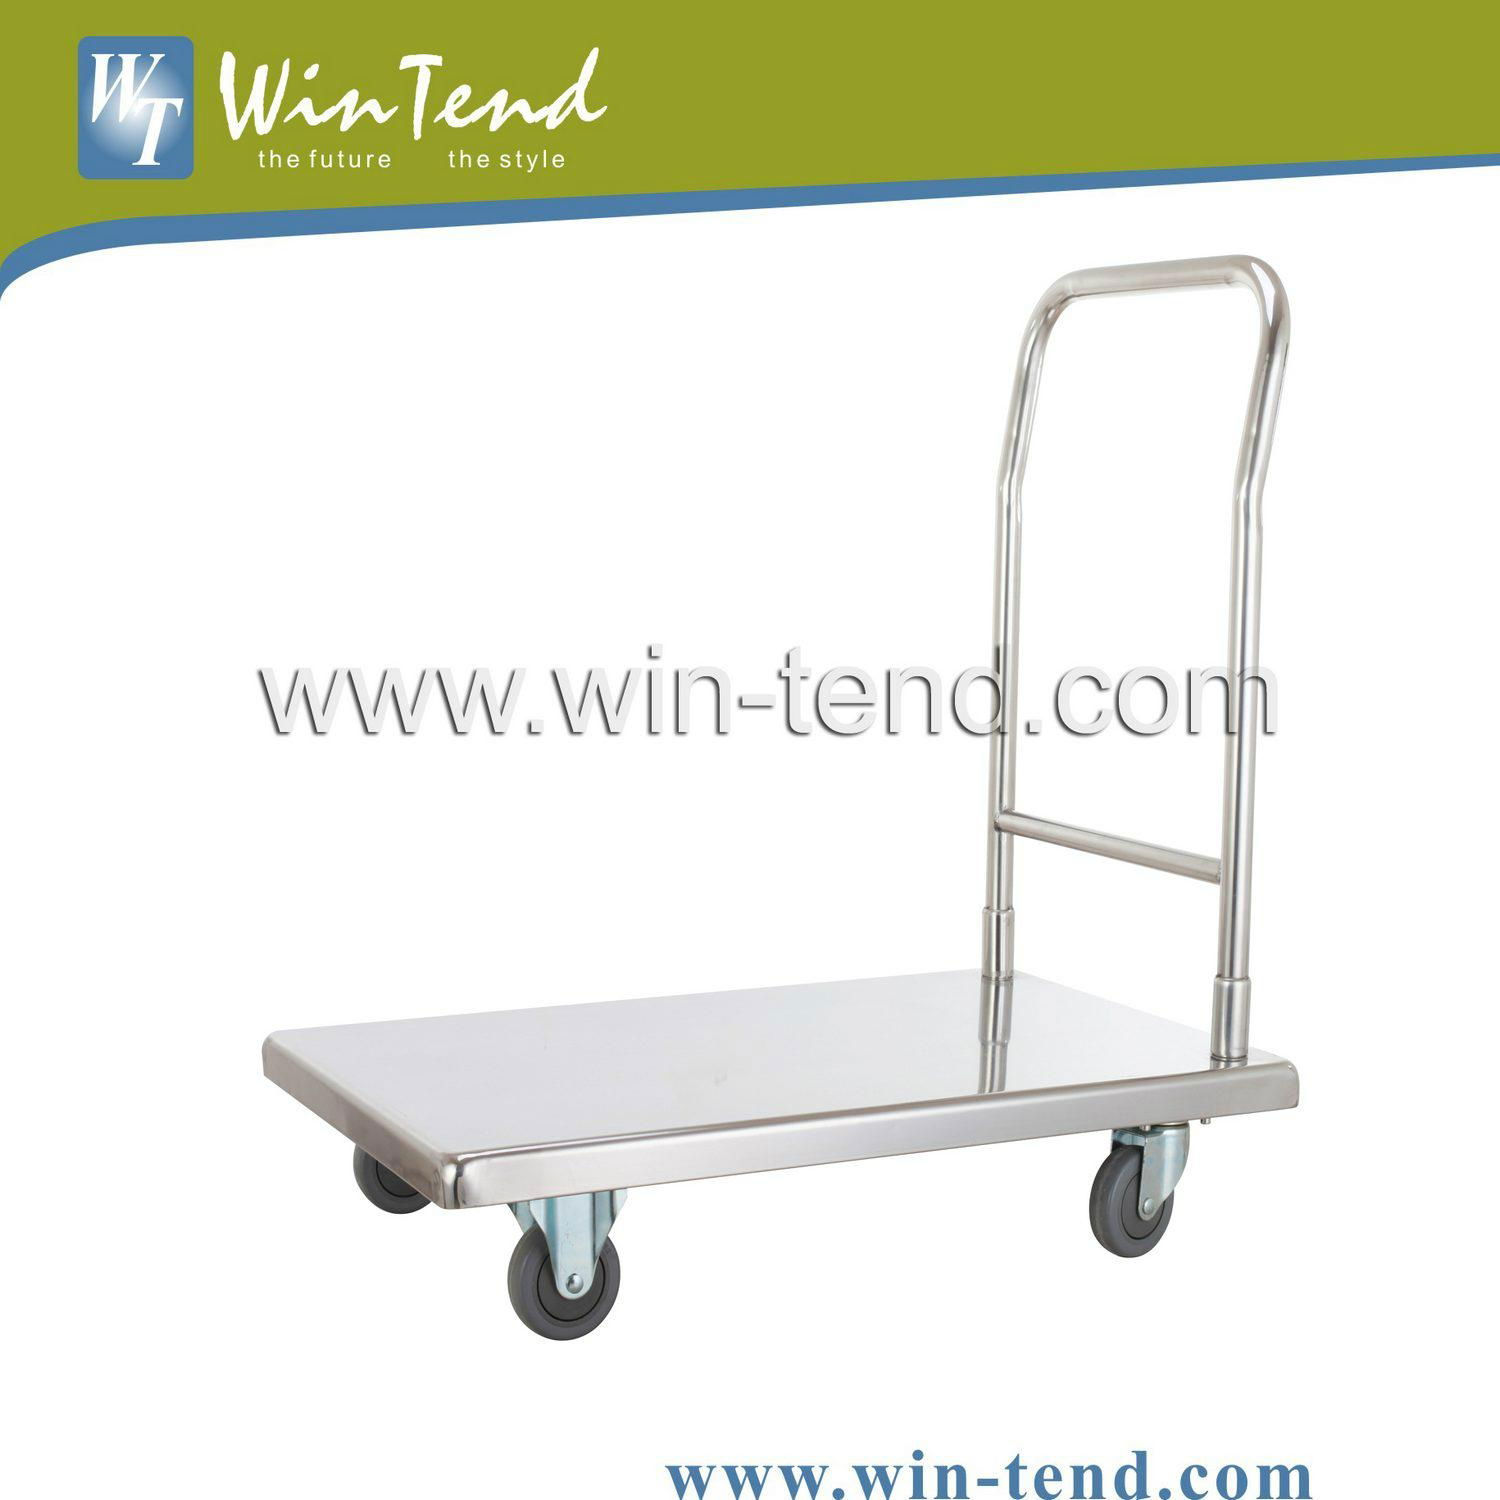 Stainless Steel Platform Cart